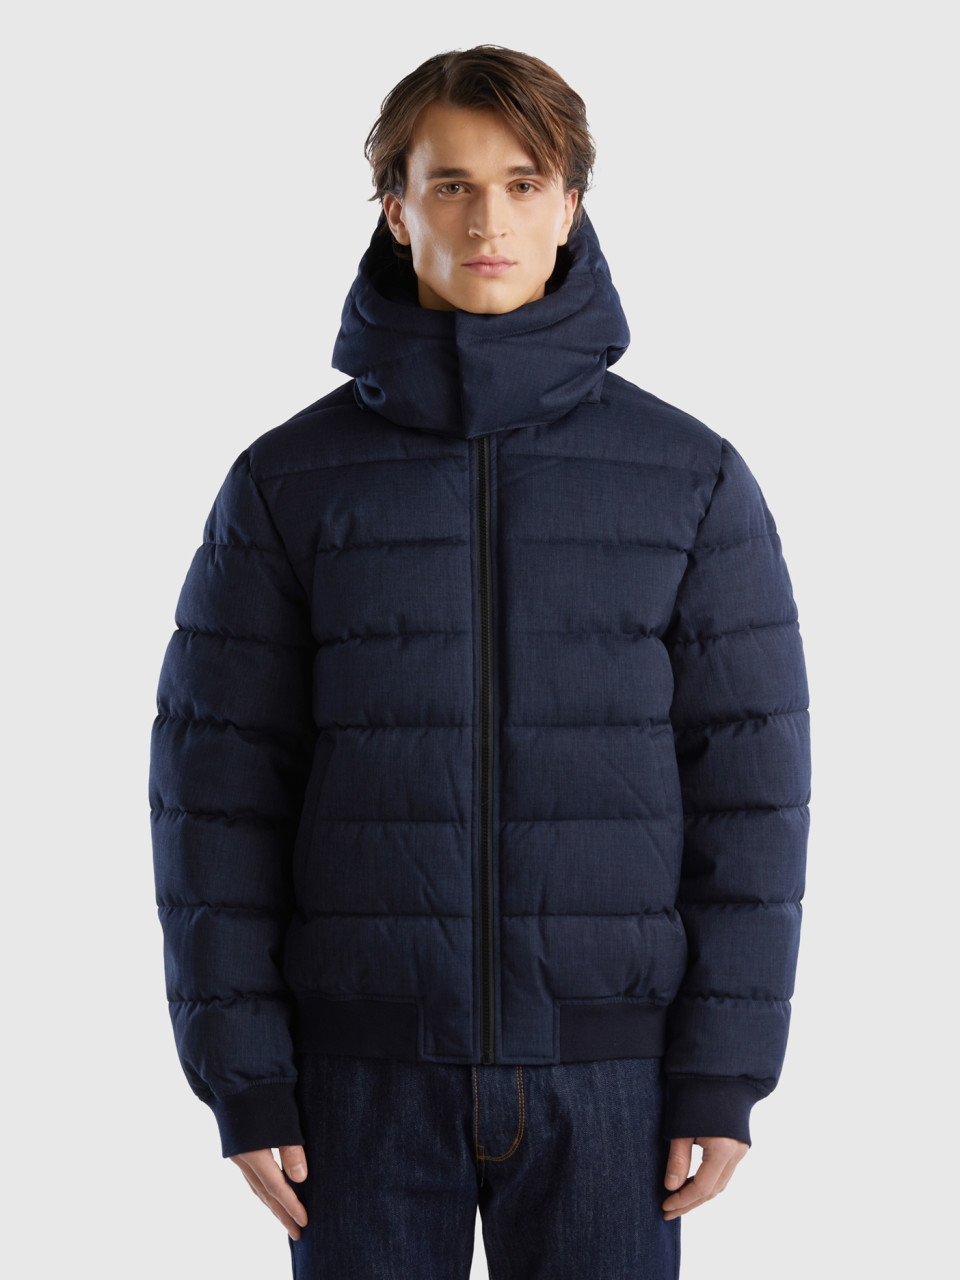 Benetton, Short Padded Jacket With Detachable Hood, Dark Blue, Men